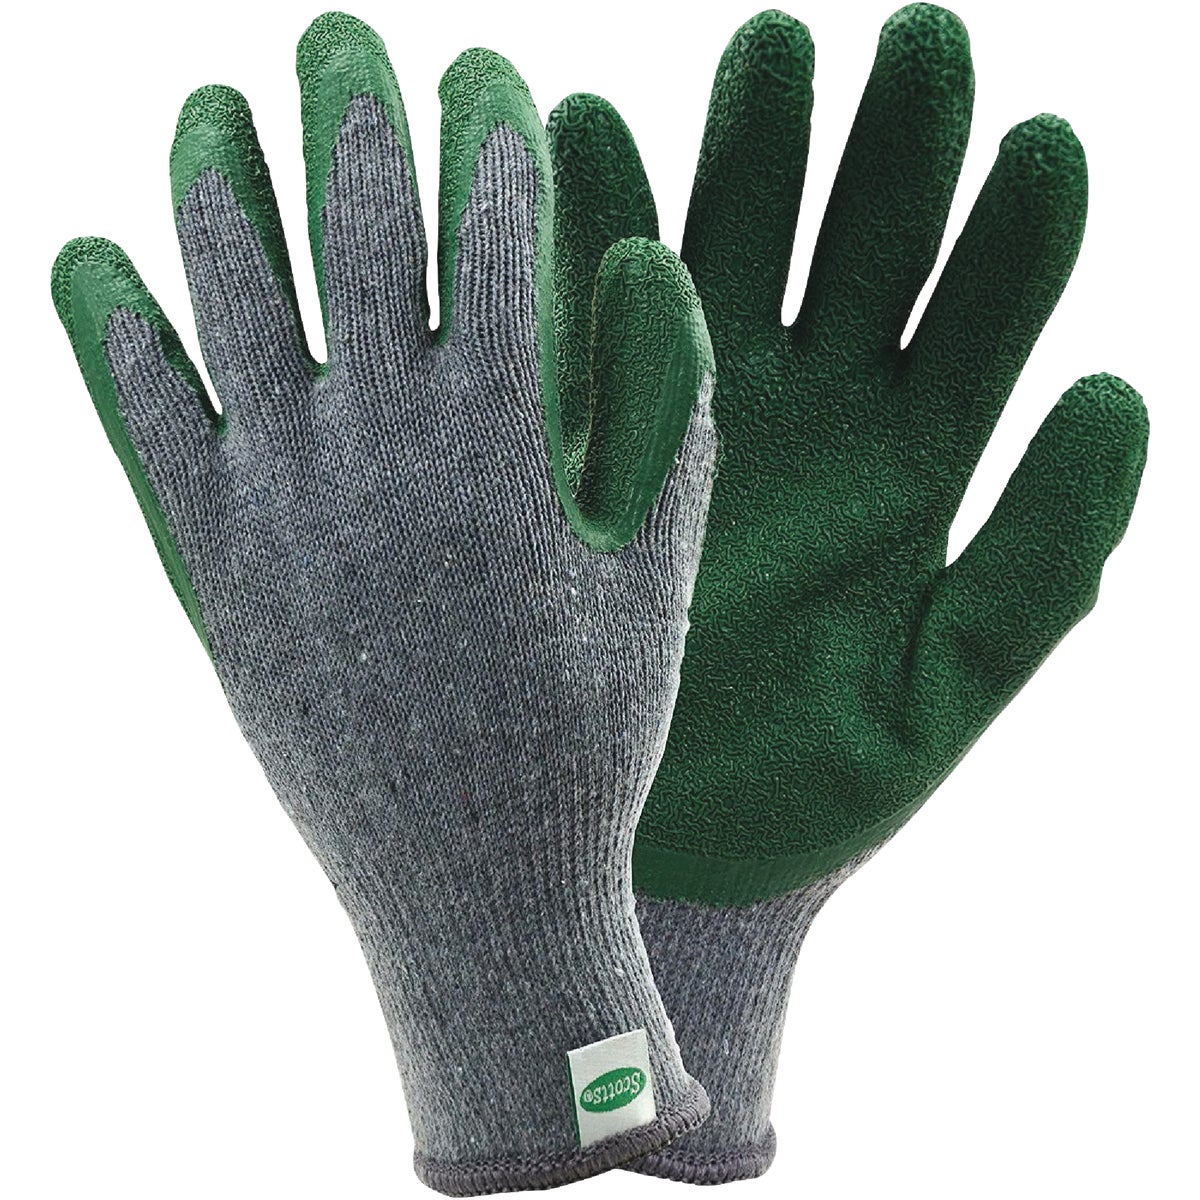 Scotts Yard Care Large Wet/Dry Grip Garden Glove (3-Pack)